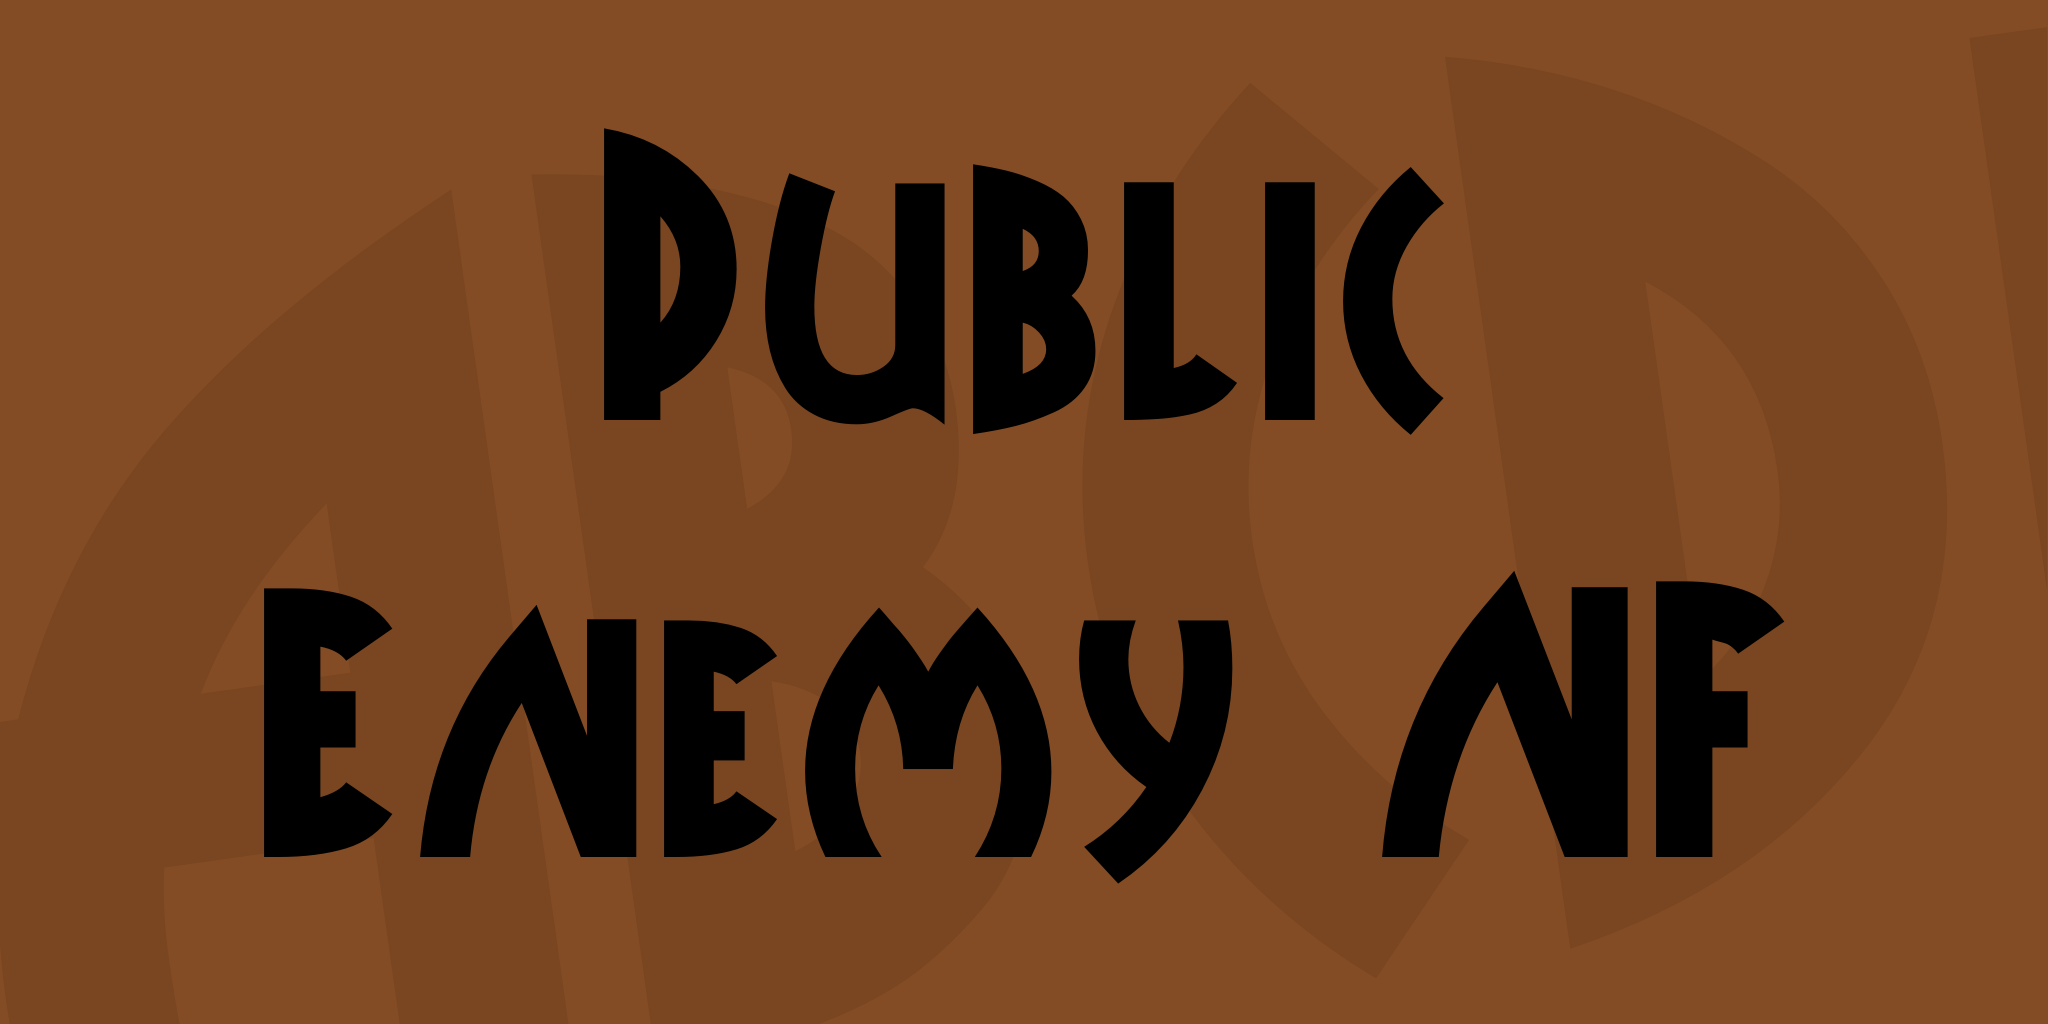 Public Enemy Nf